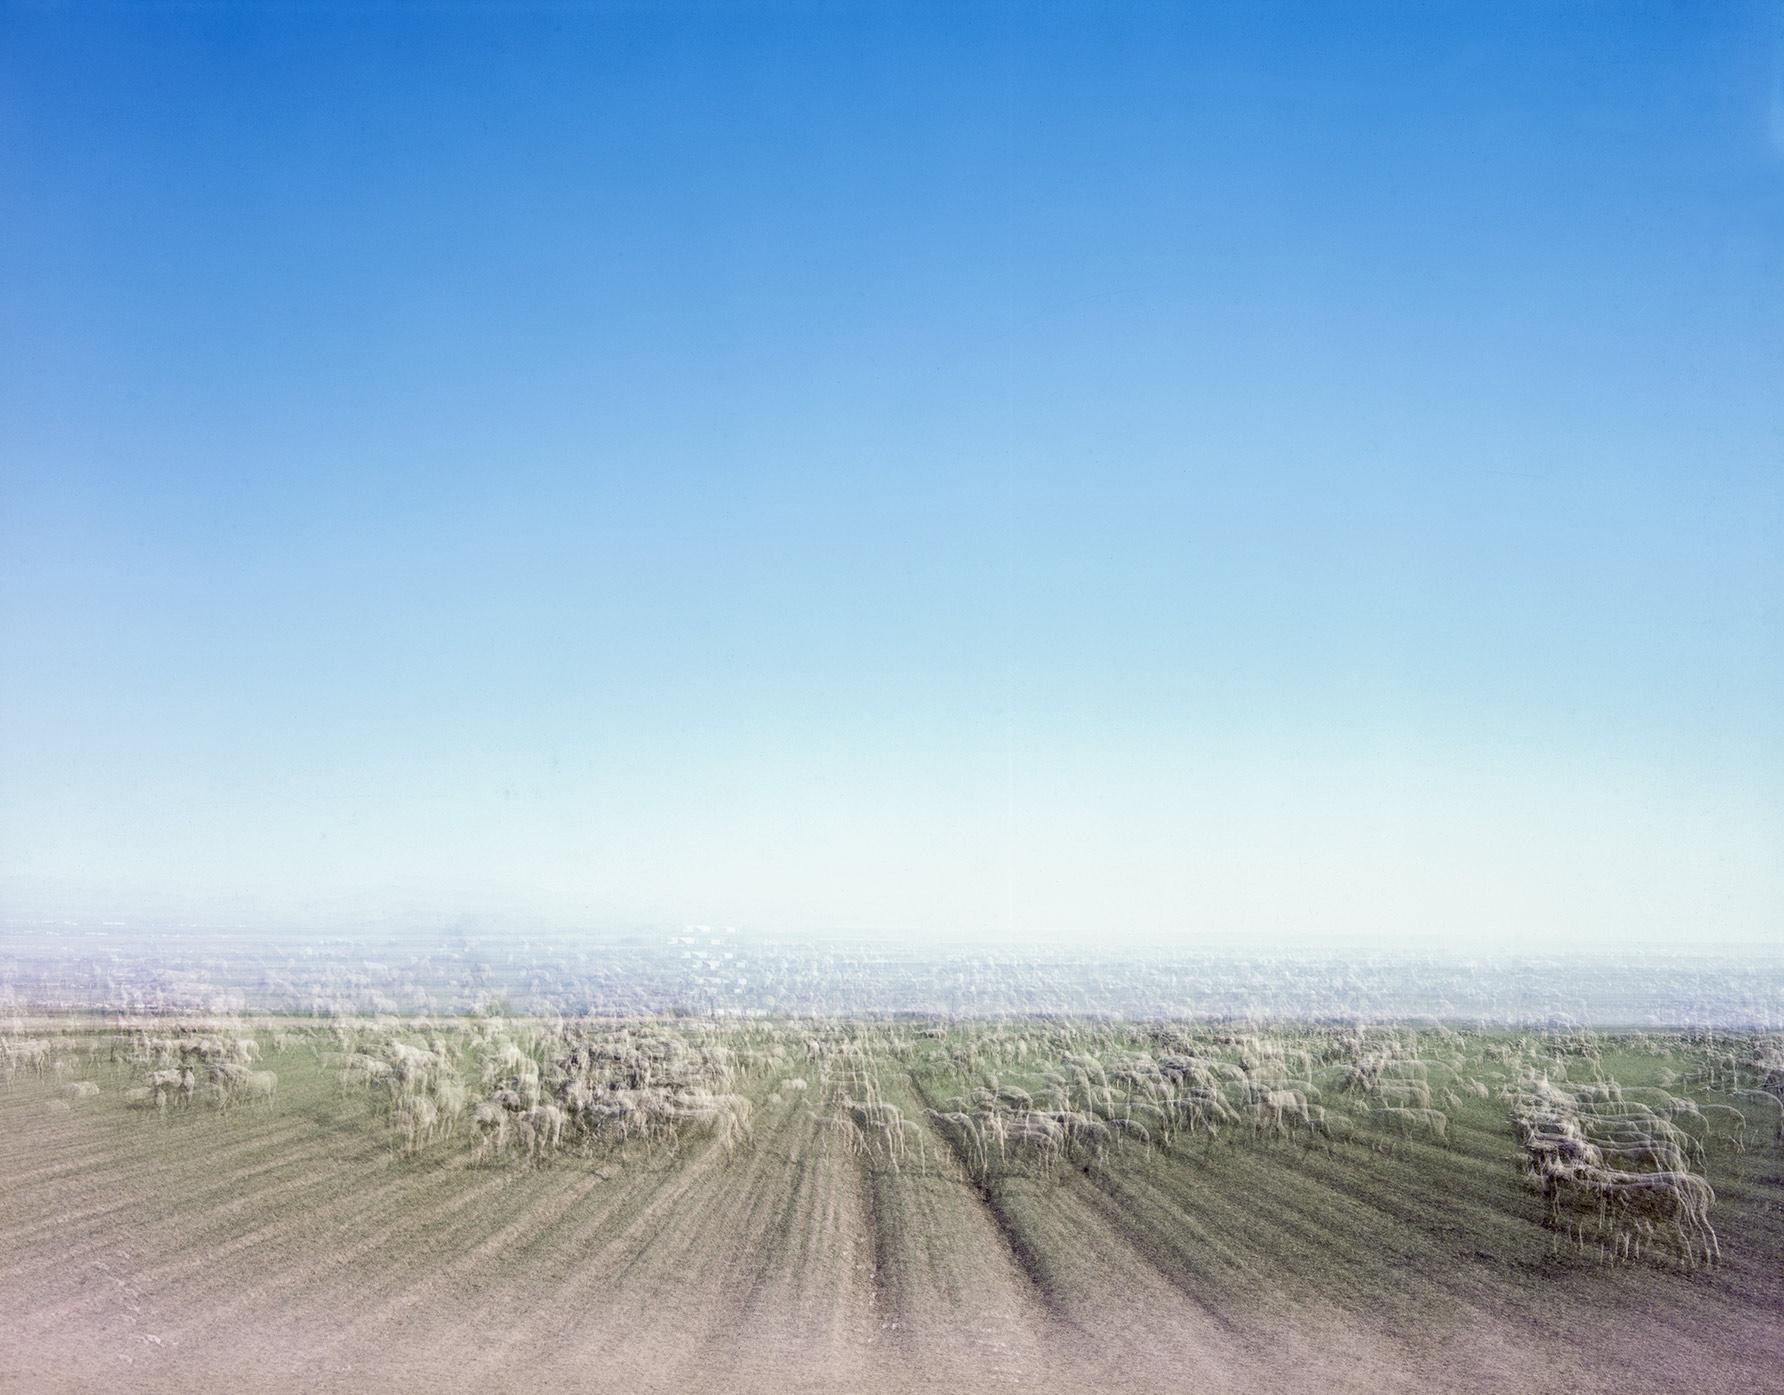 Poby Landscape Photograph - Sheep